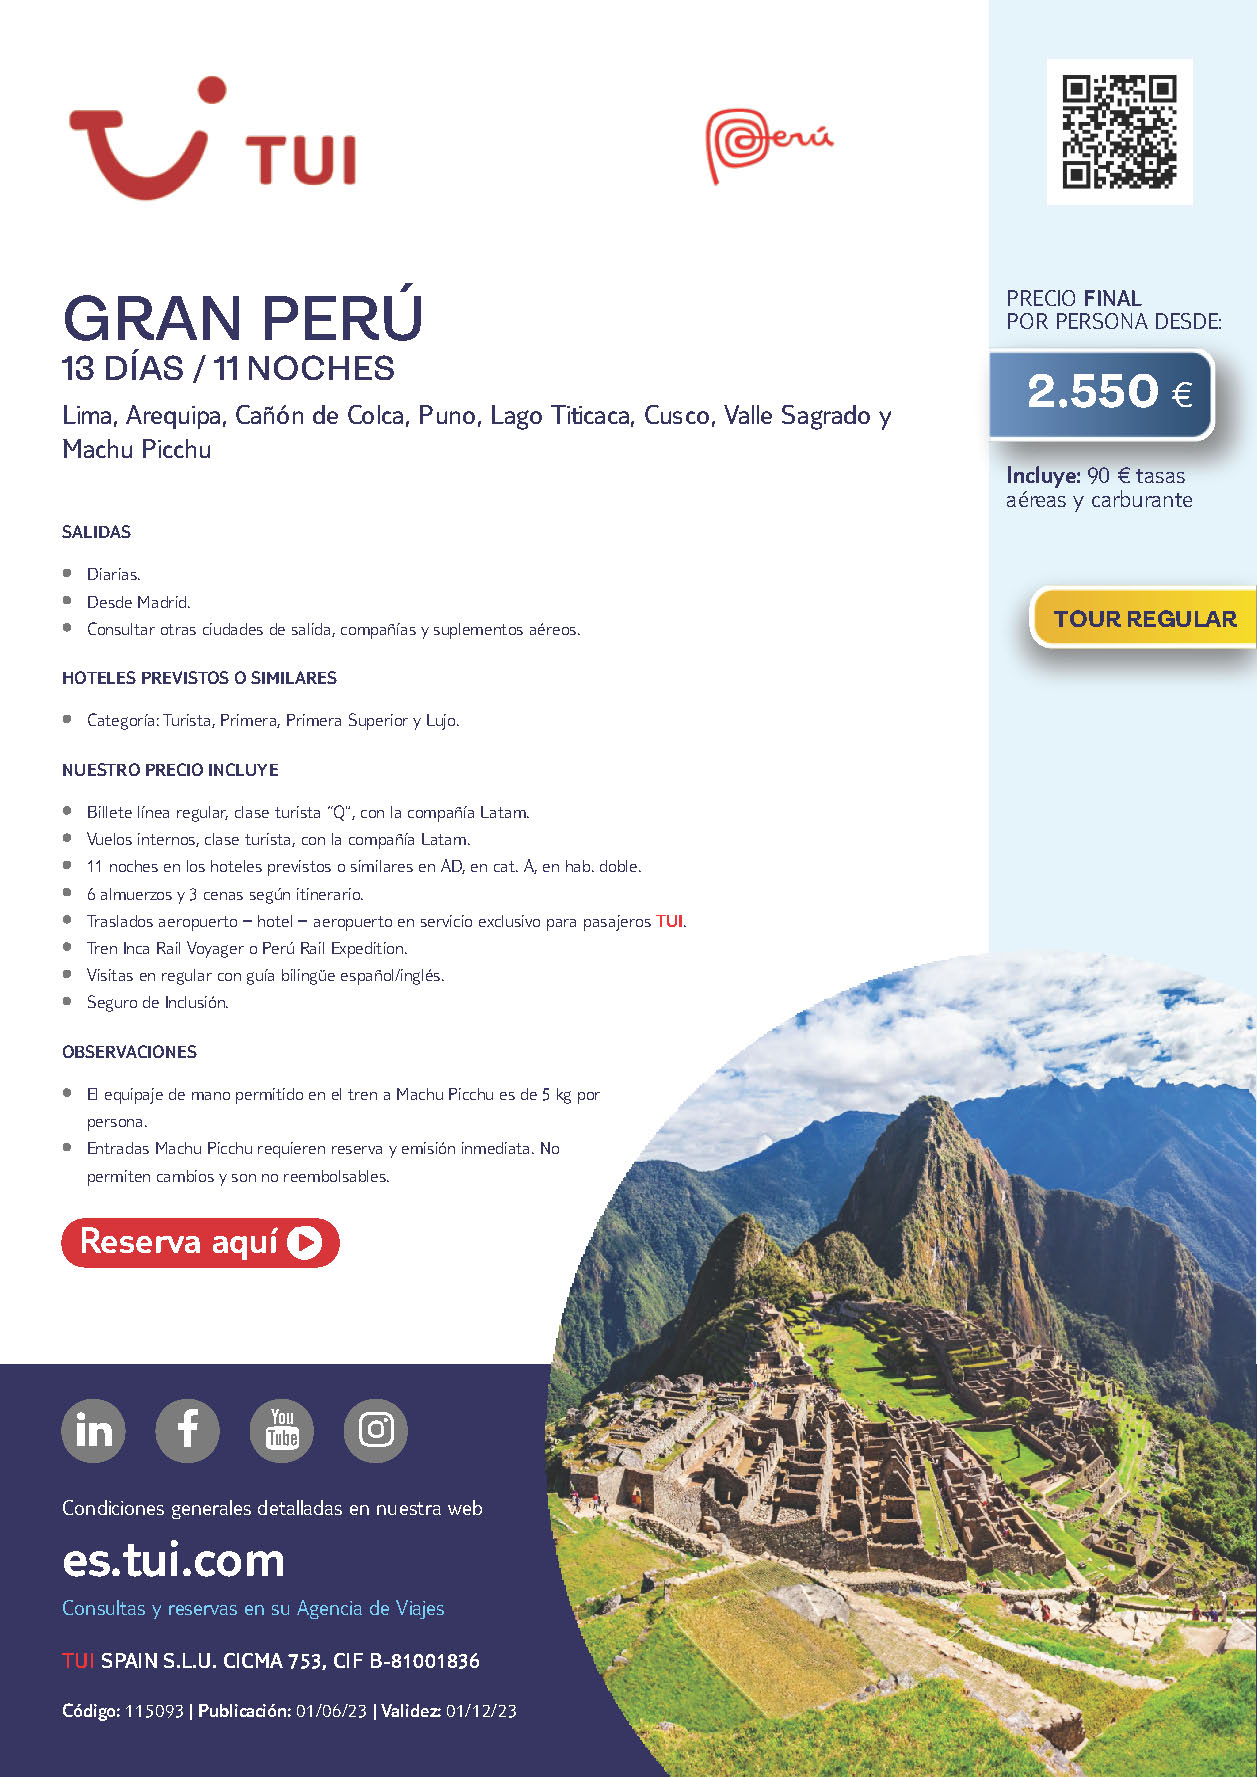 Oferta TUI circuito Gran Peru 13 dias salidas Junio a Diciembre 2023 desde Madrid vuelos Latam